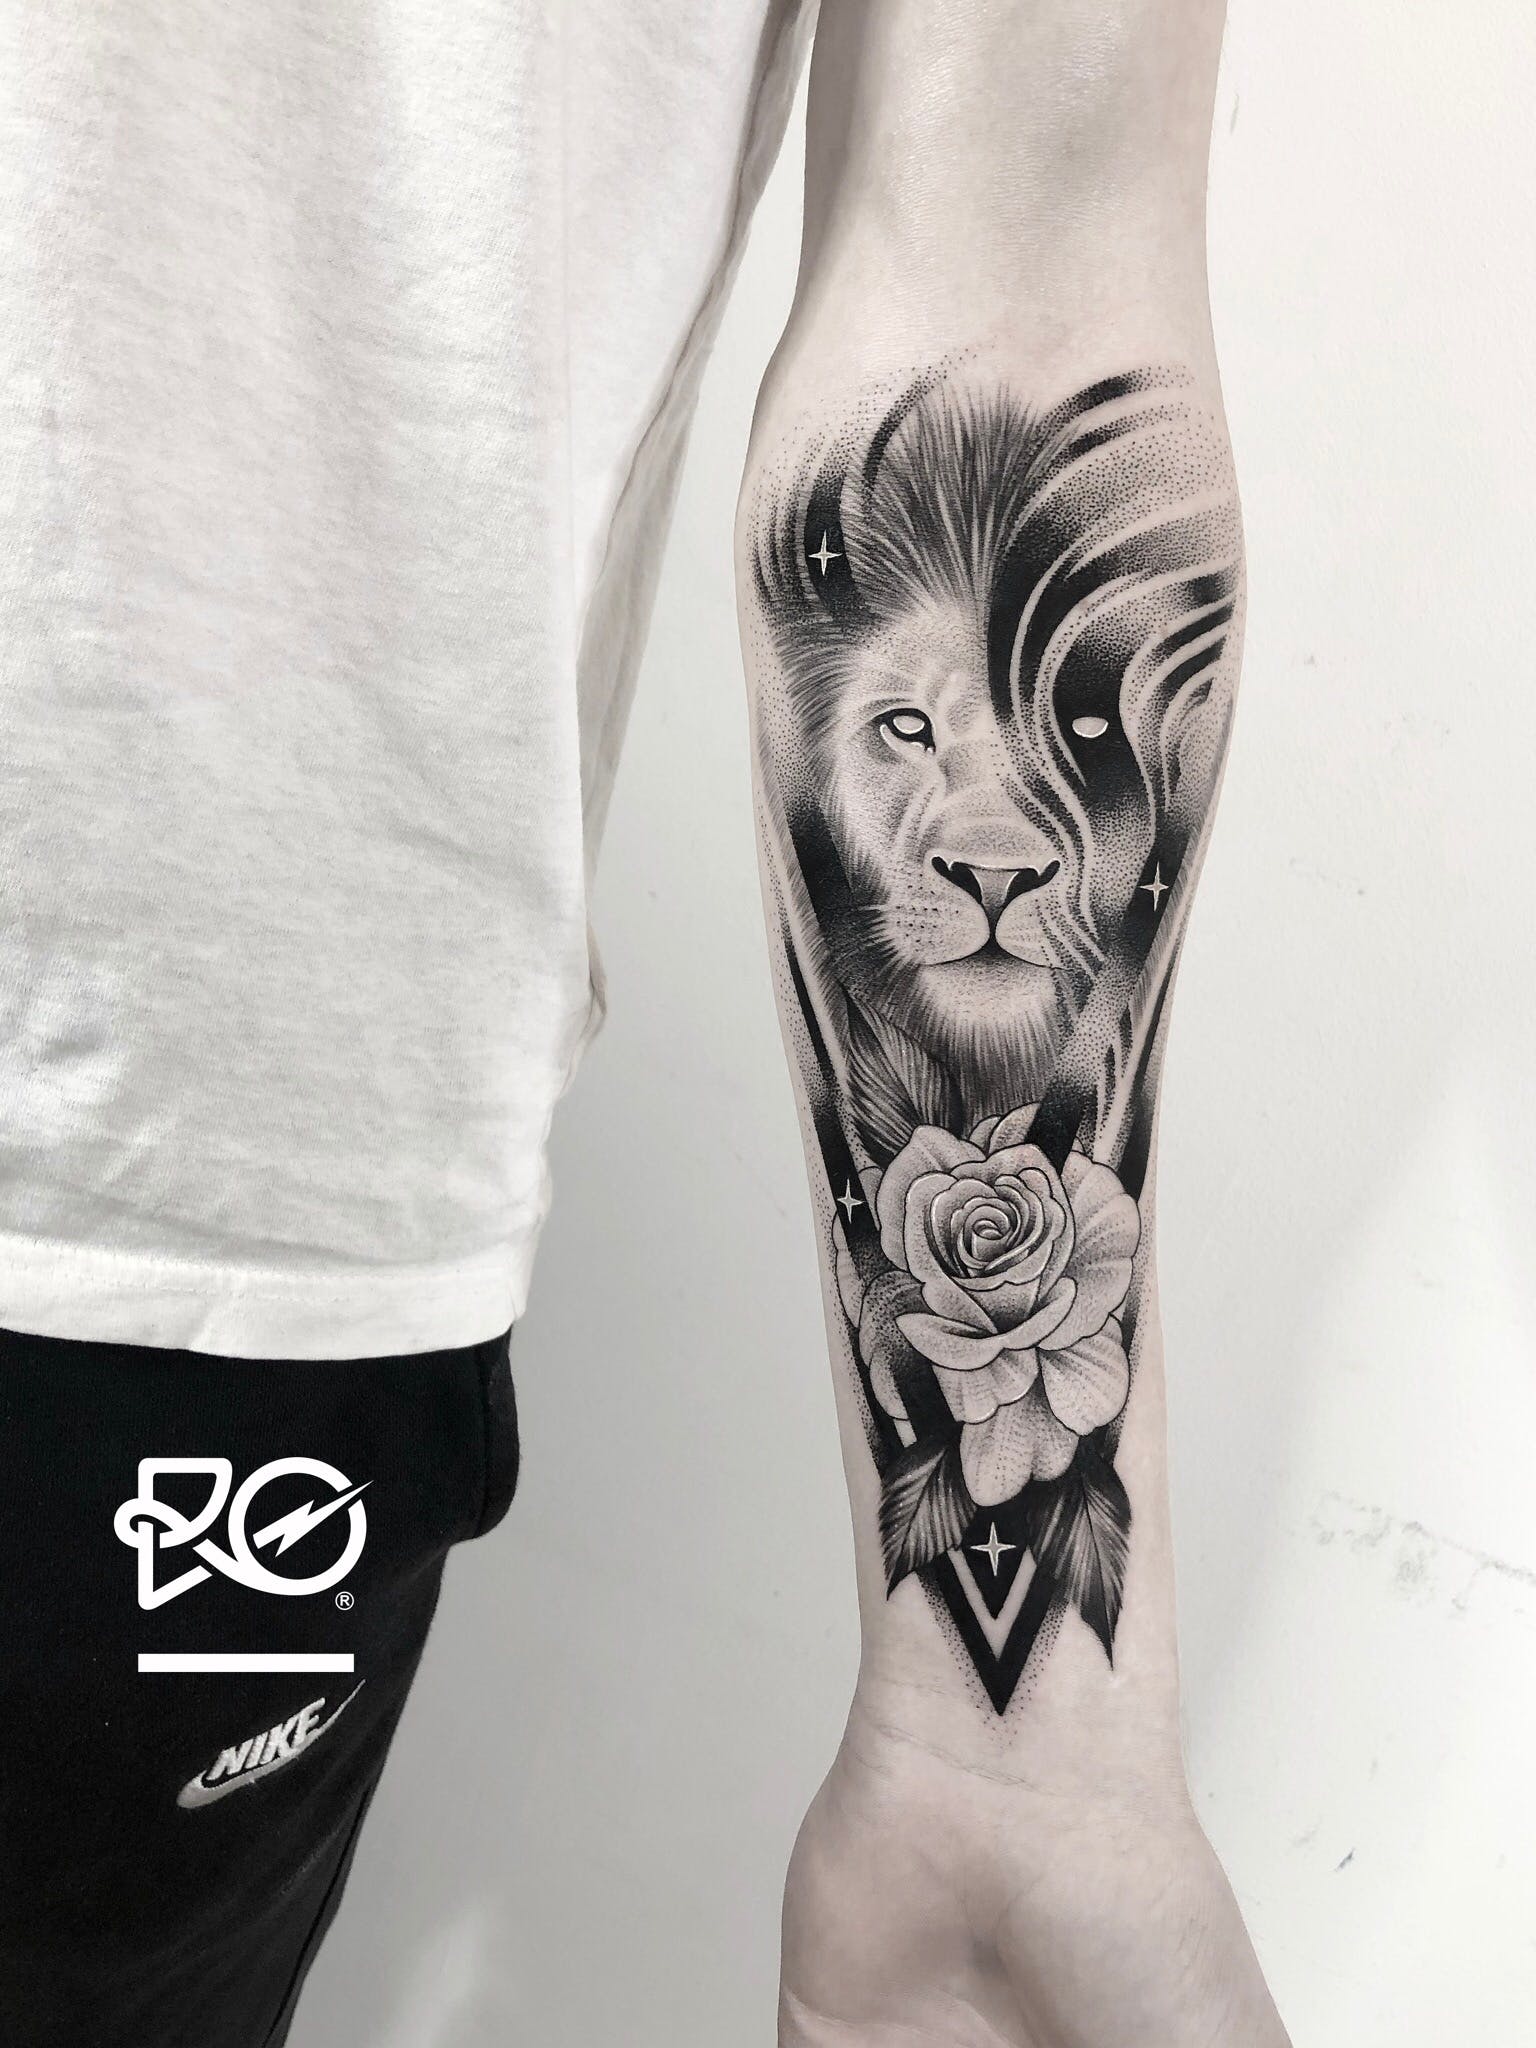 Lion Tattoo Ideas: Mystical Lion and Rose Tattoo on Forearm